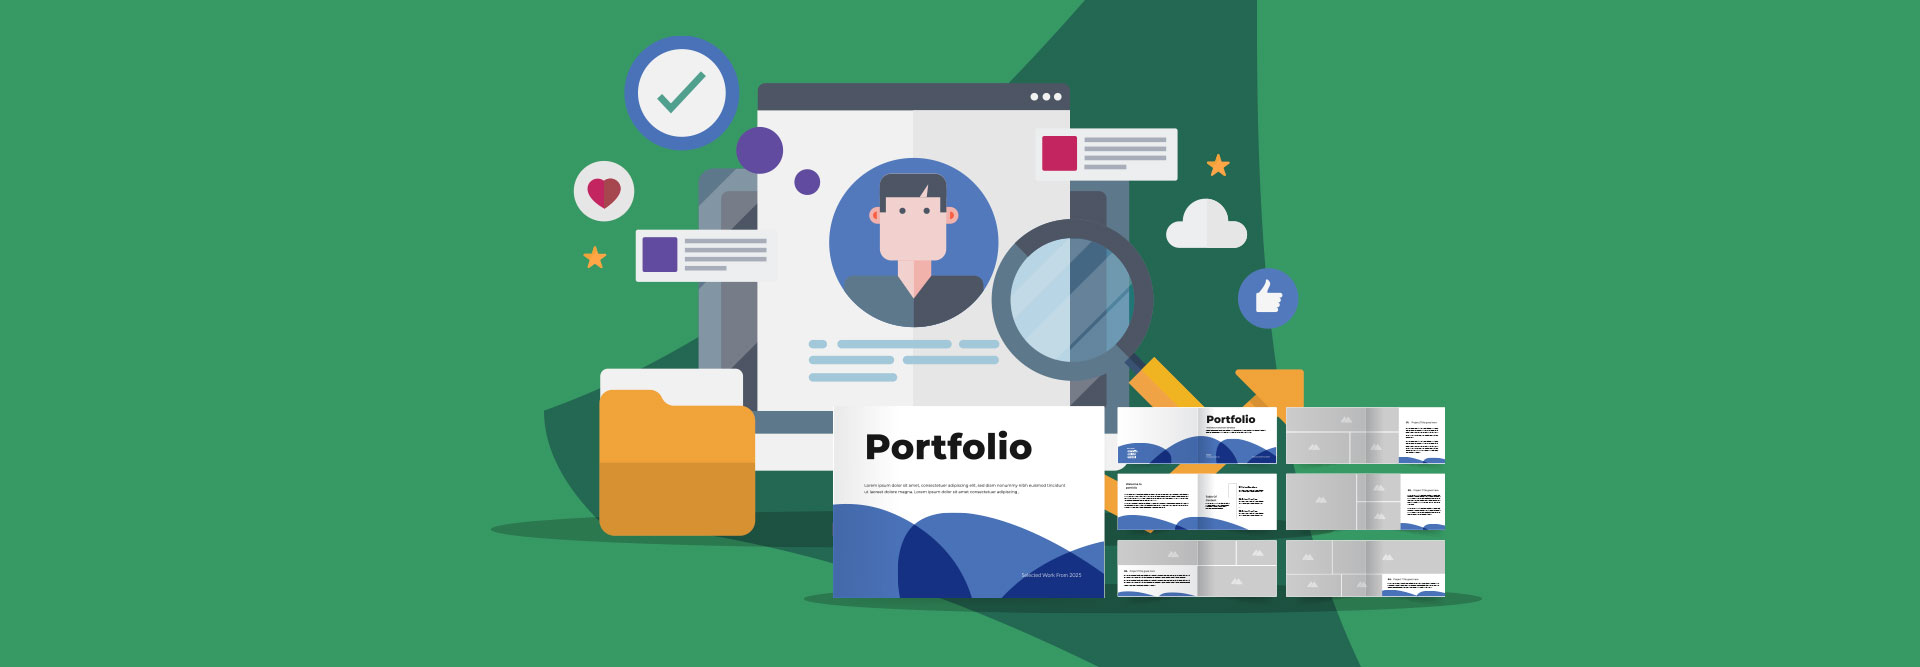 A visually appealing representation of a business's digital marketing portfolio, showcasing their skills and achievements